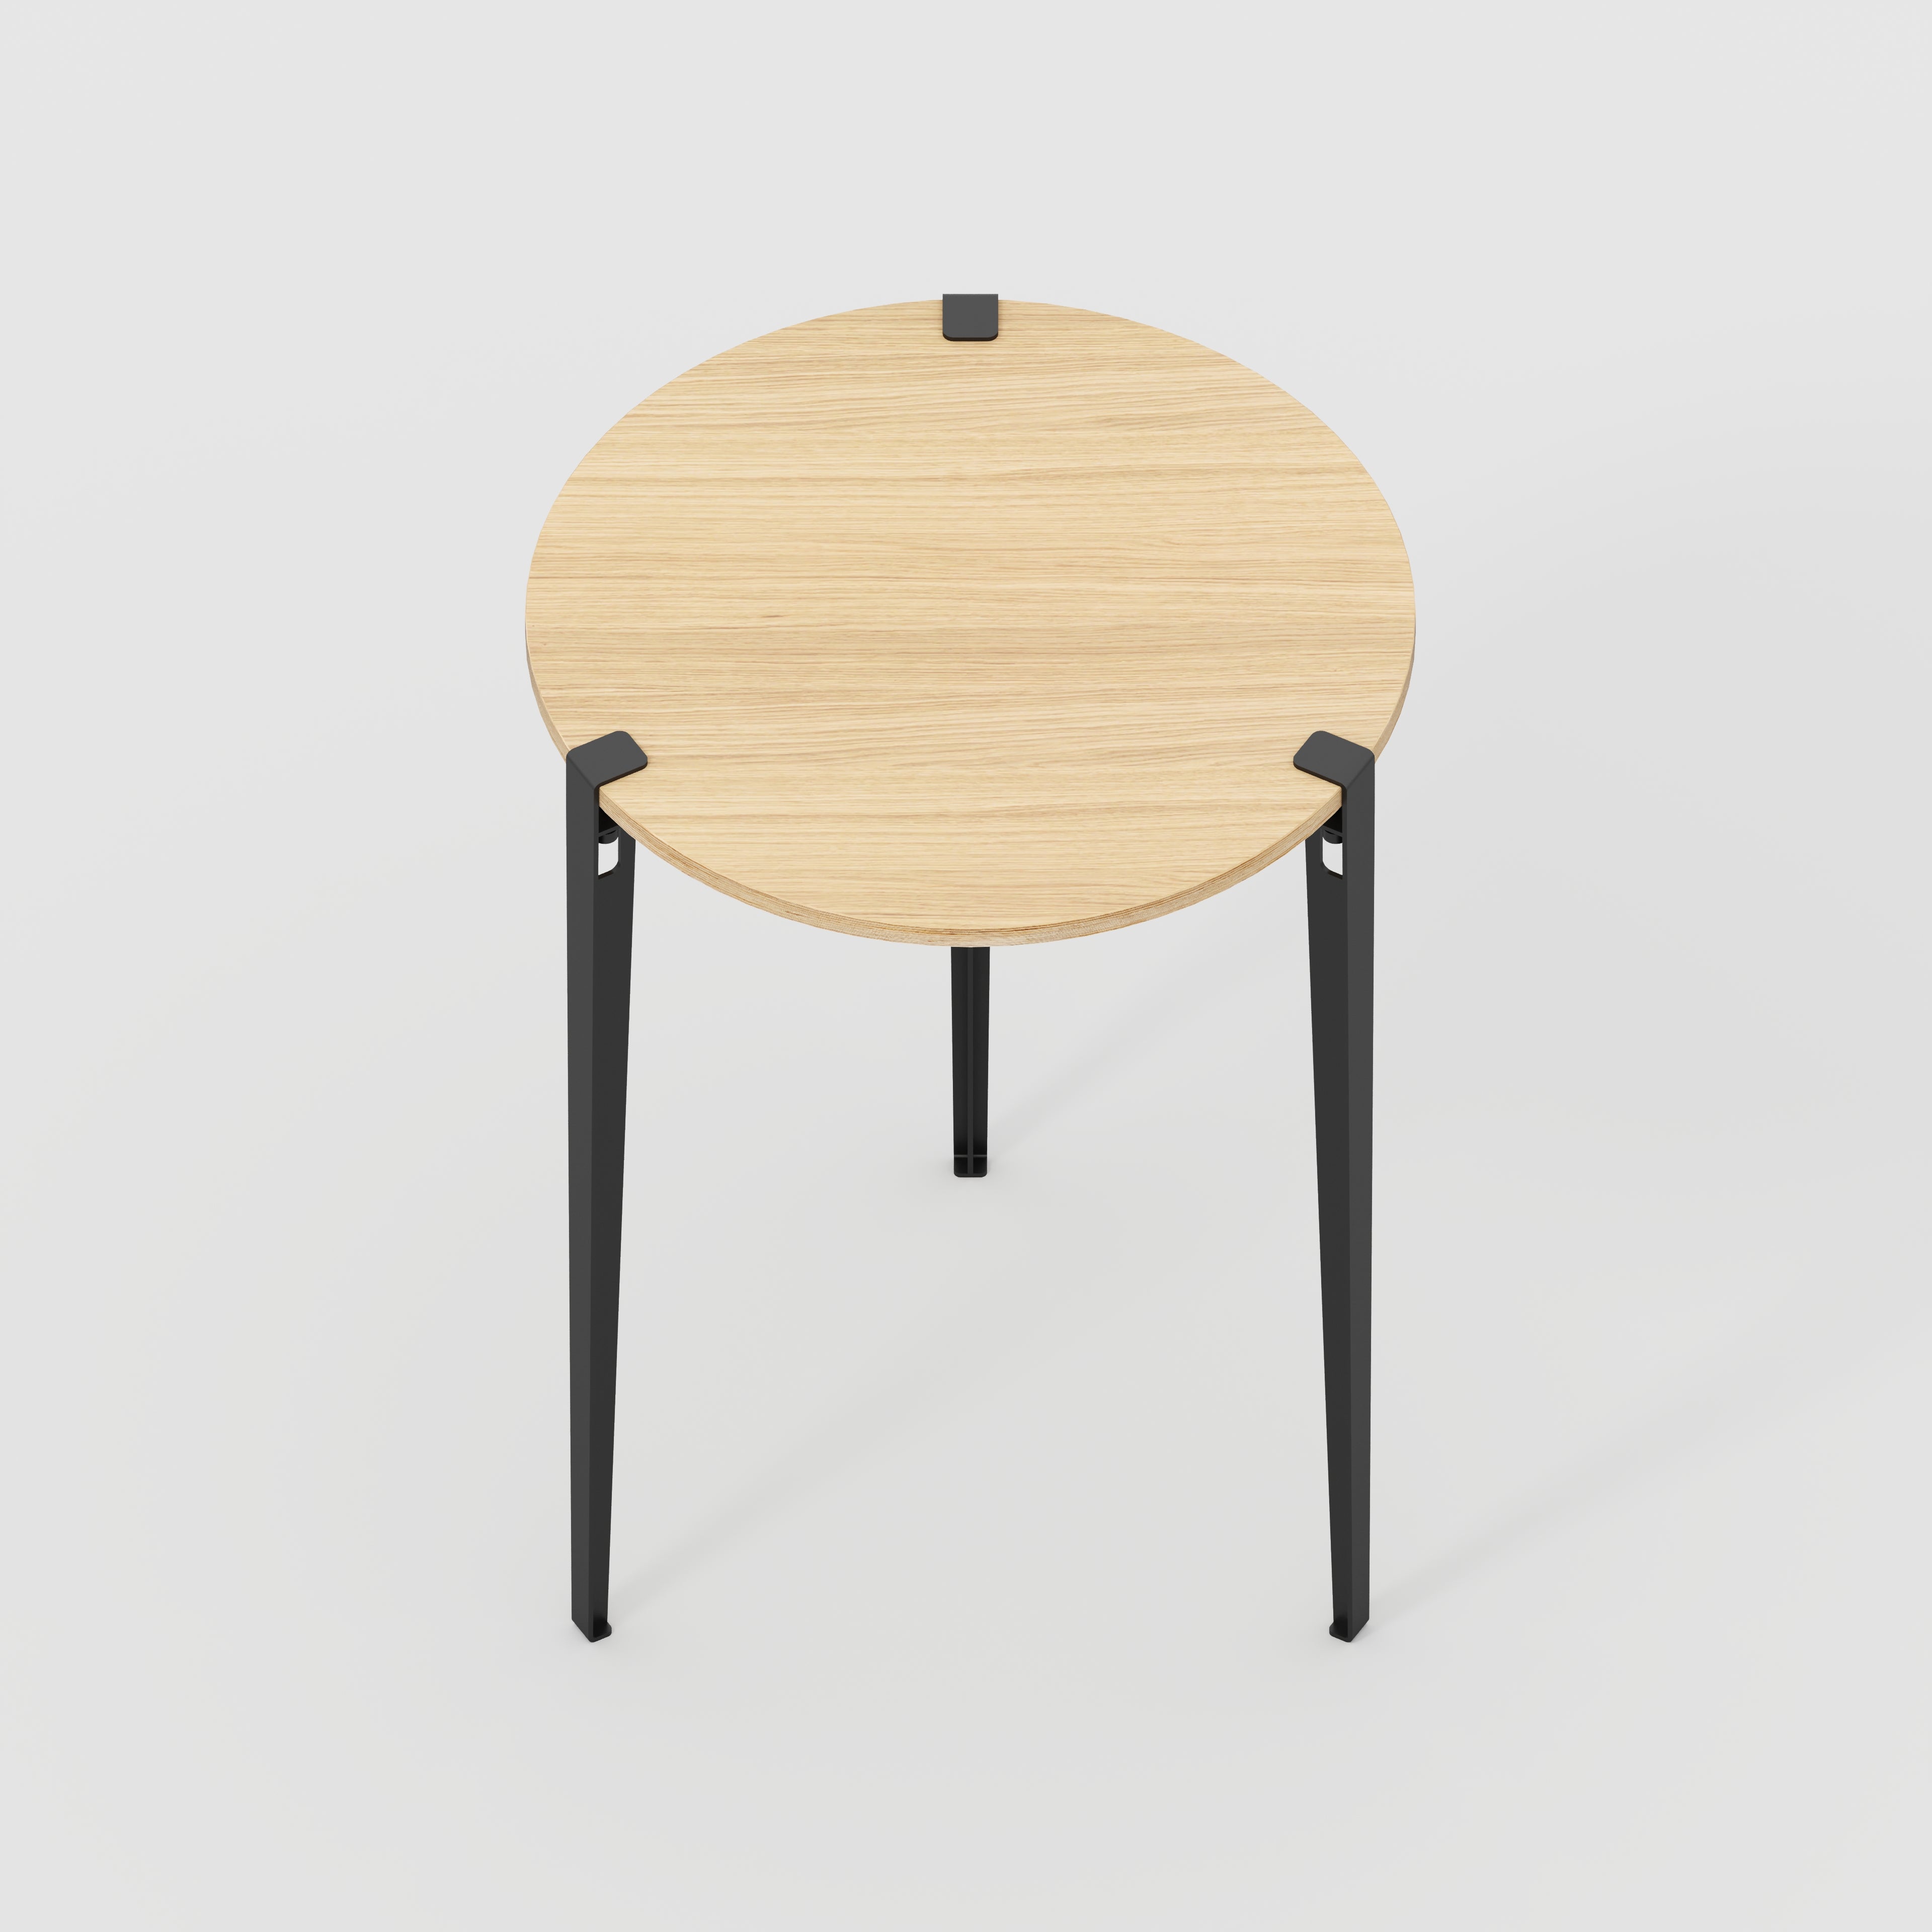 Round Table with Black Tiptoe Legs - Plywood Oak - 800(dia) x 1100(h)